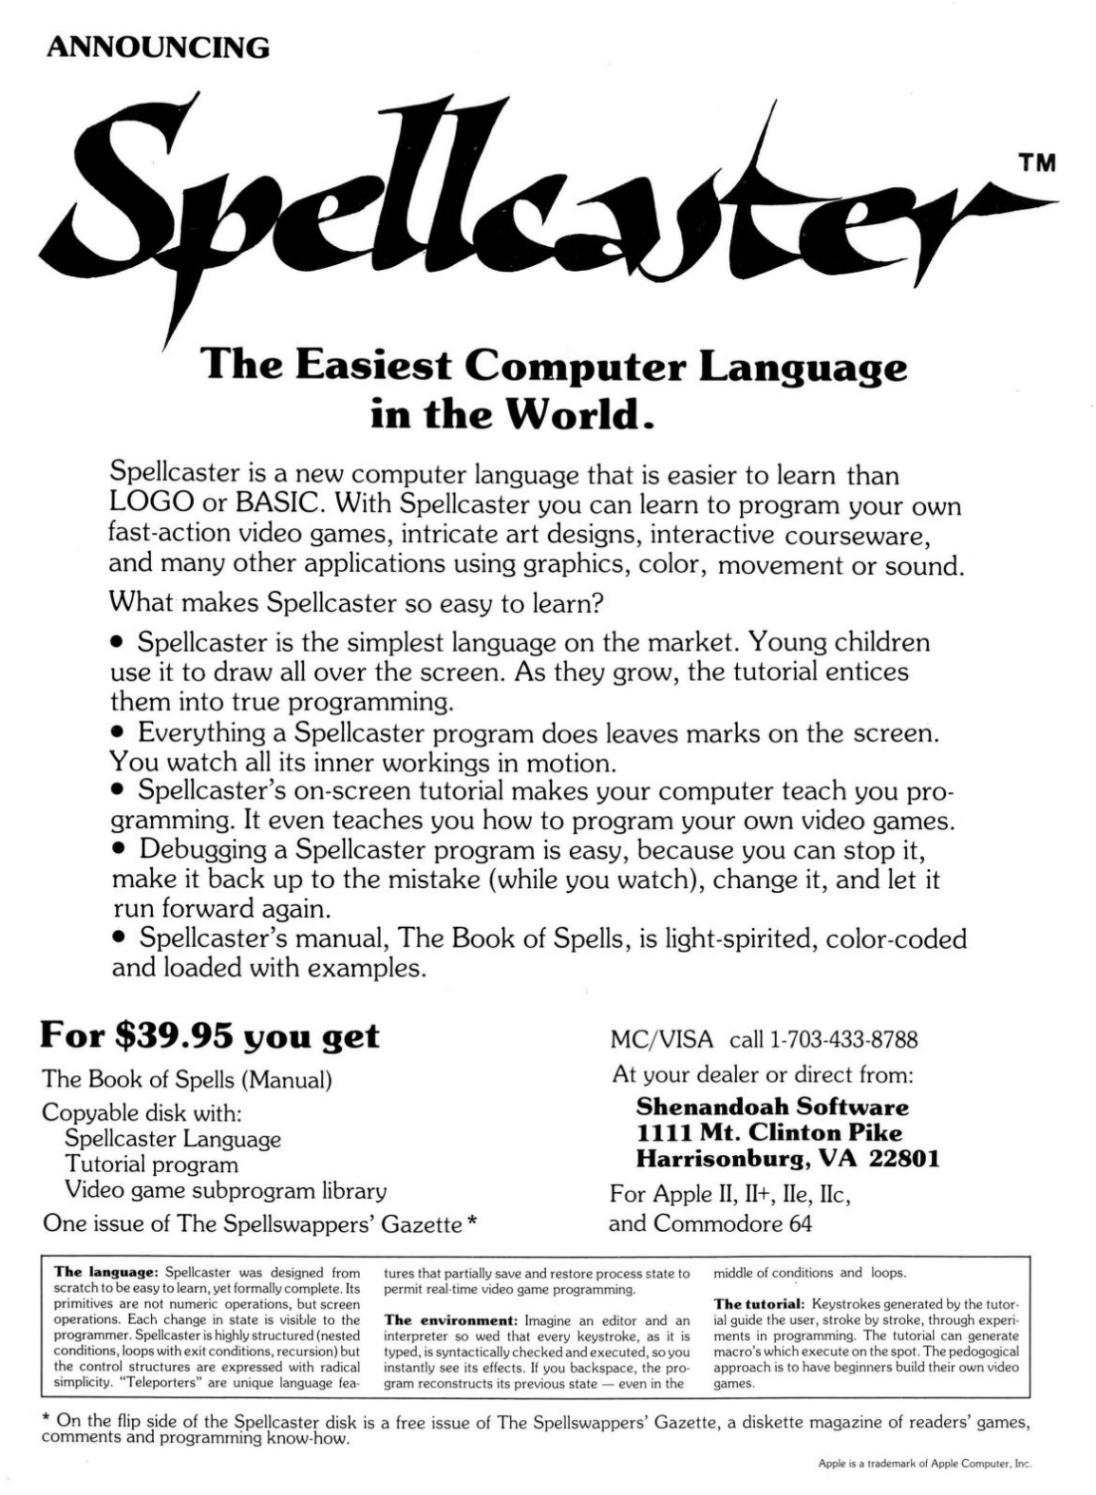 An advertisement for Spellcaster